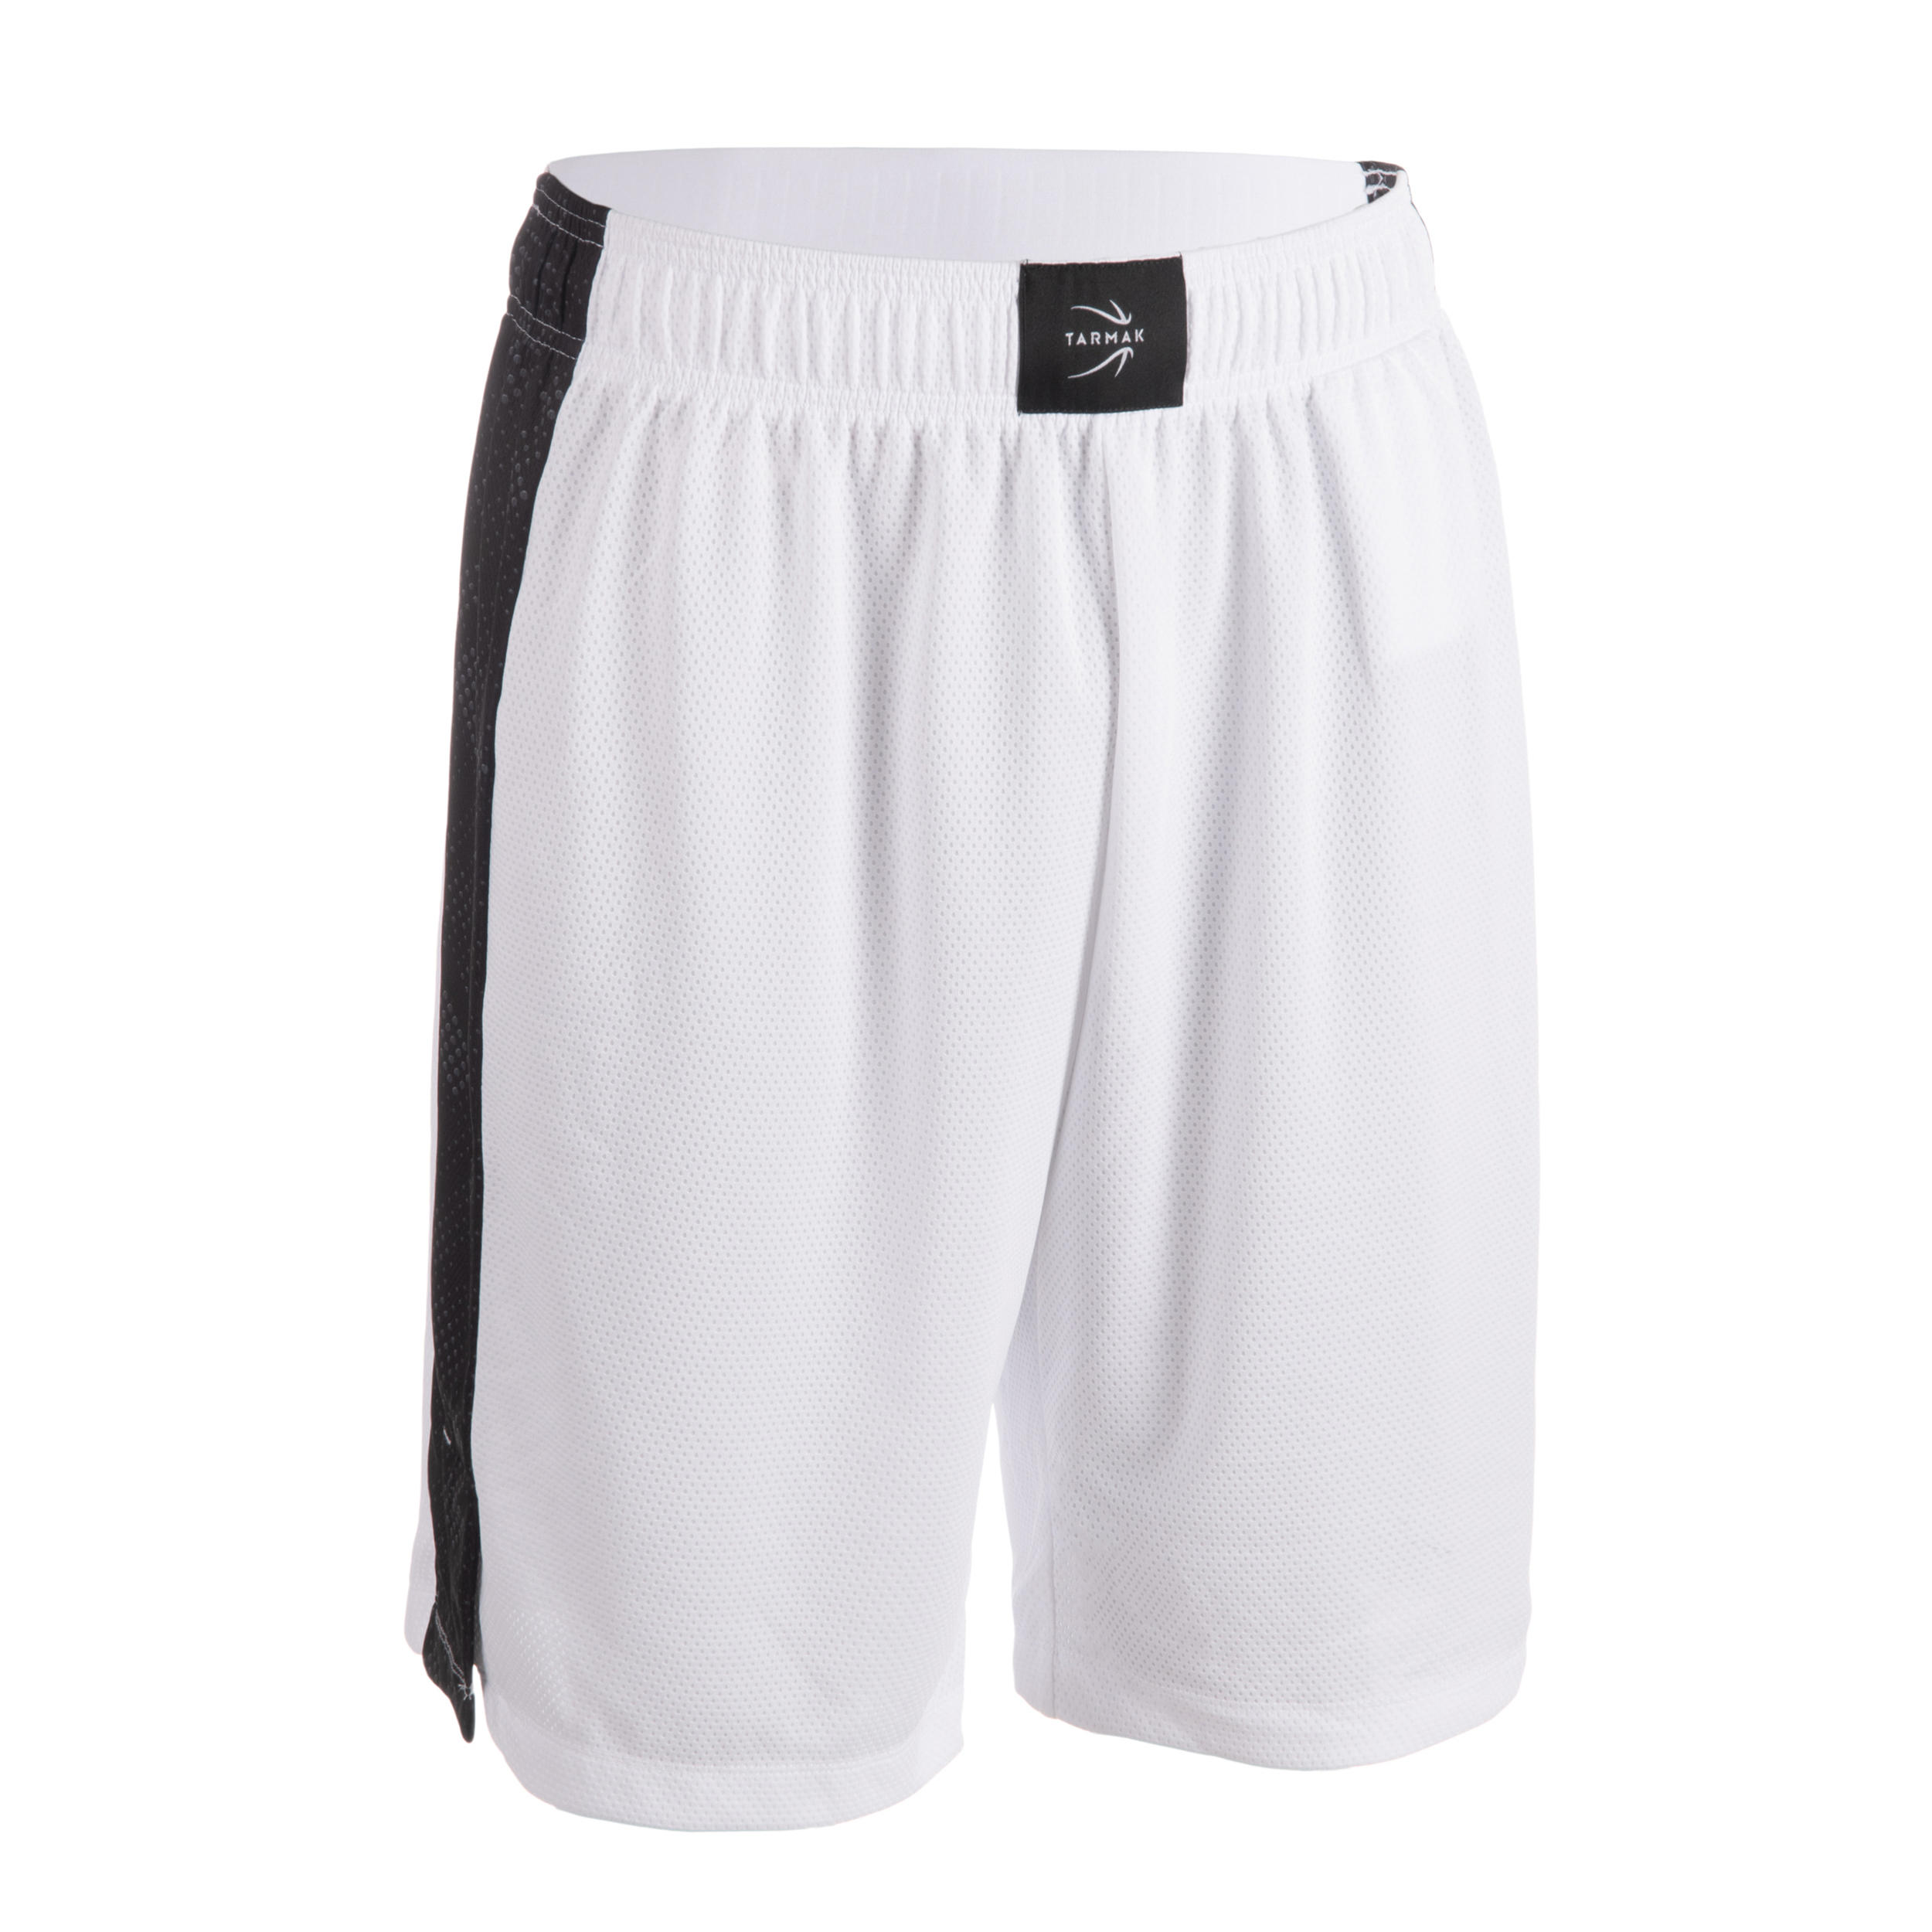 TARMAK Men's/Women's Basketball Shorts SH500 - White/Black